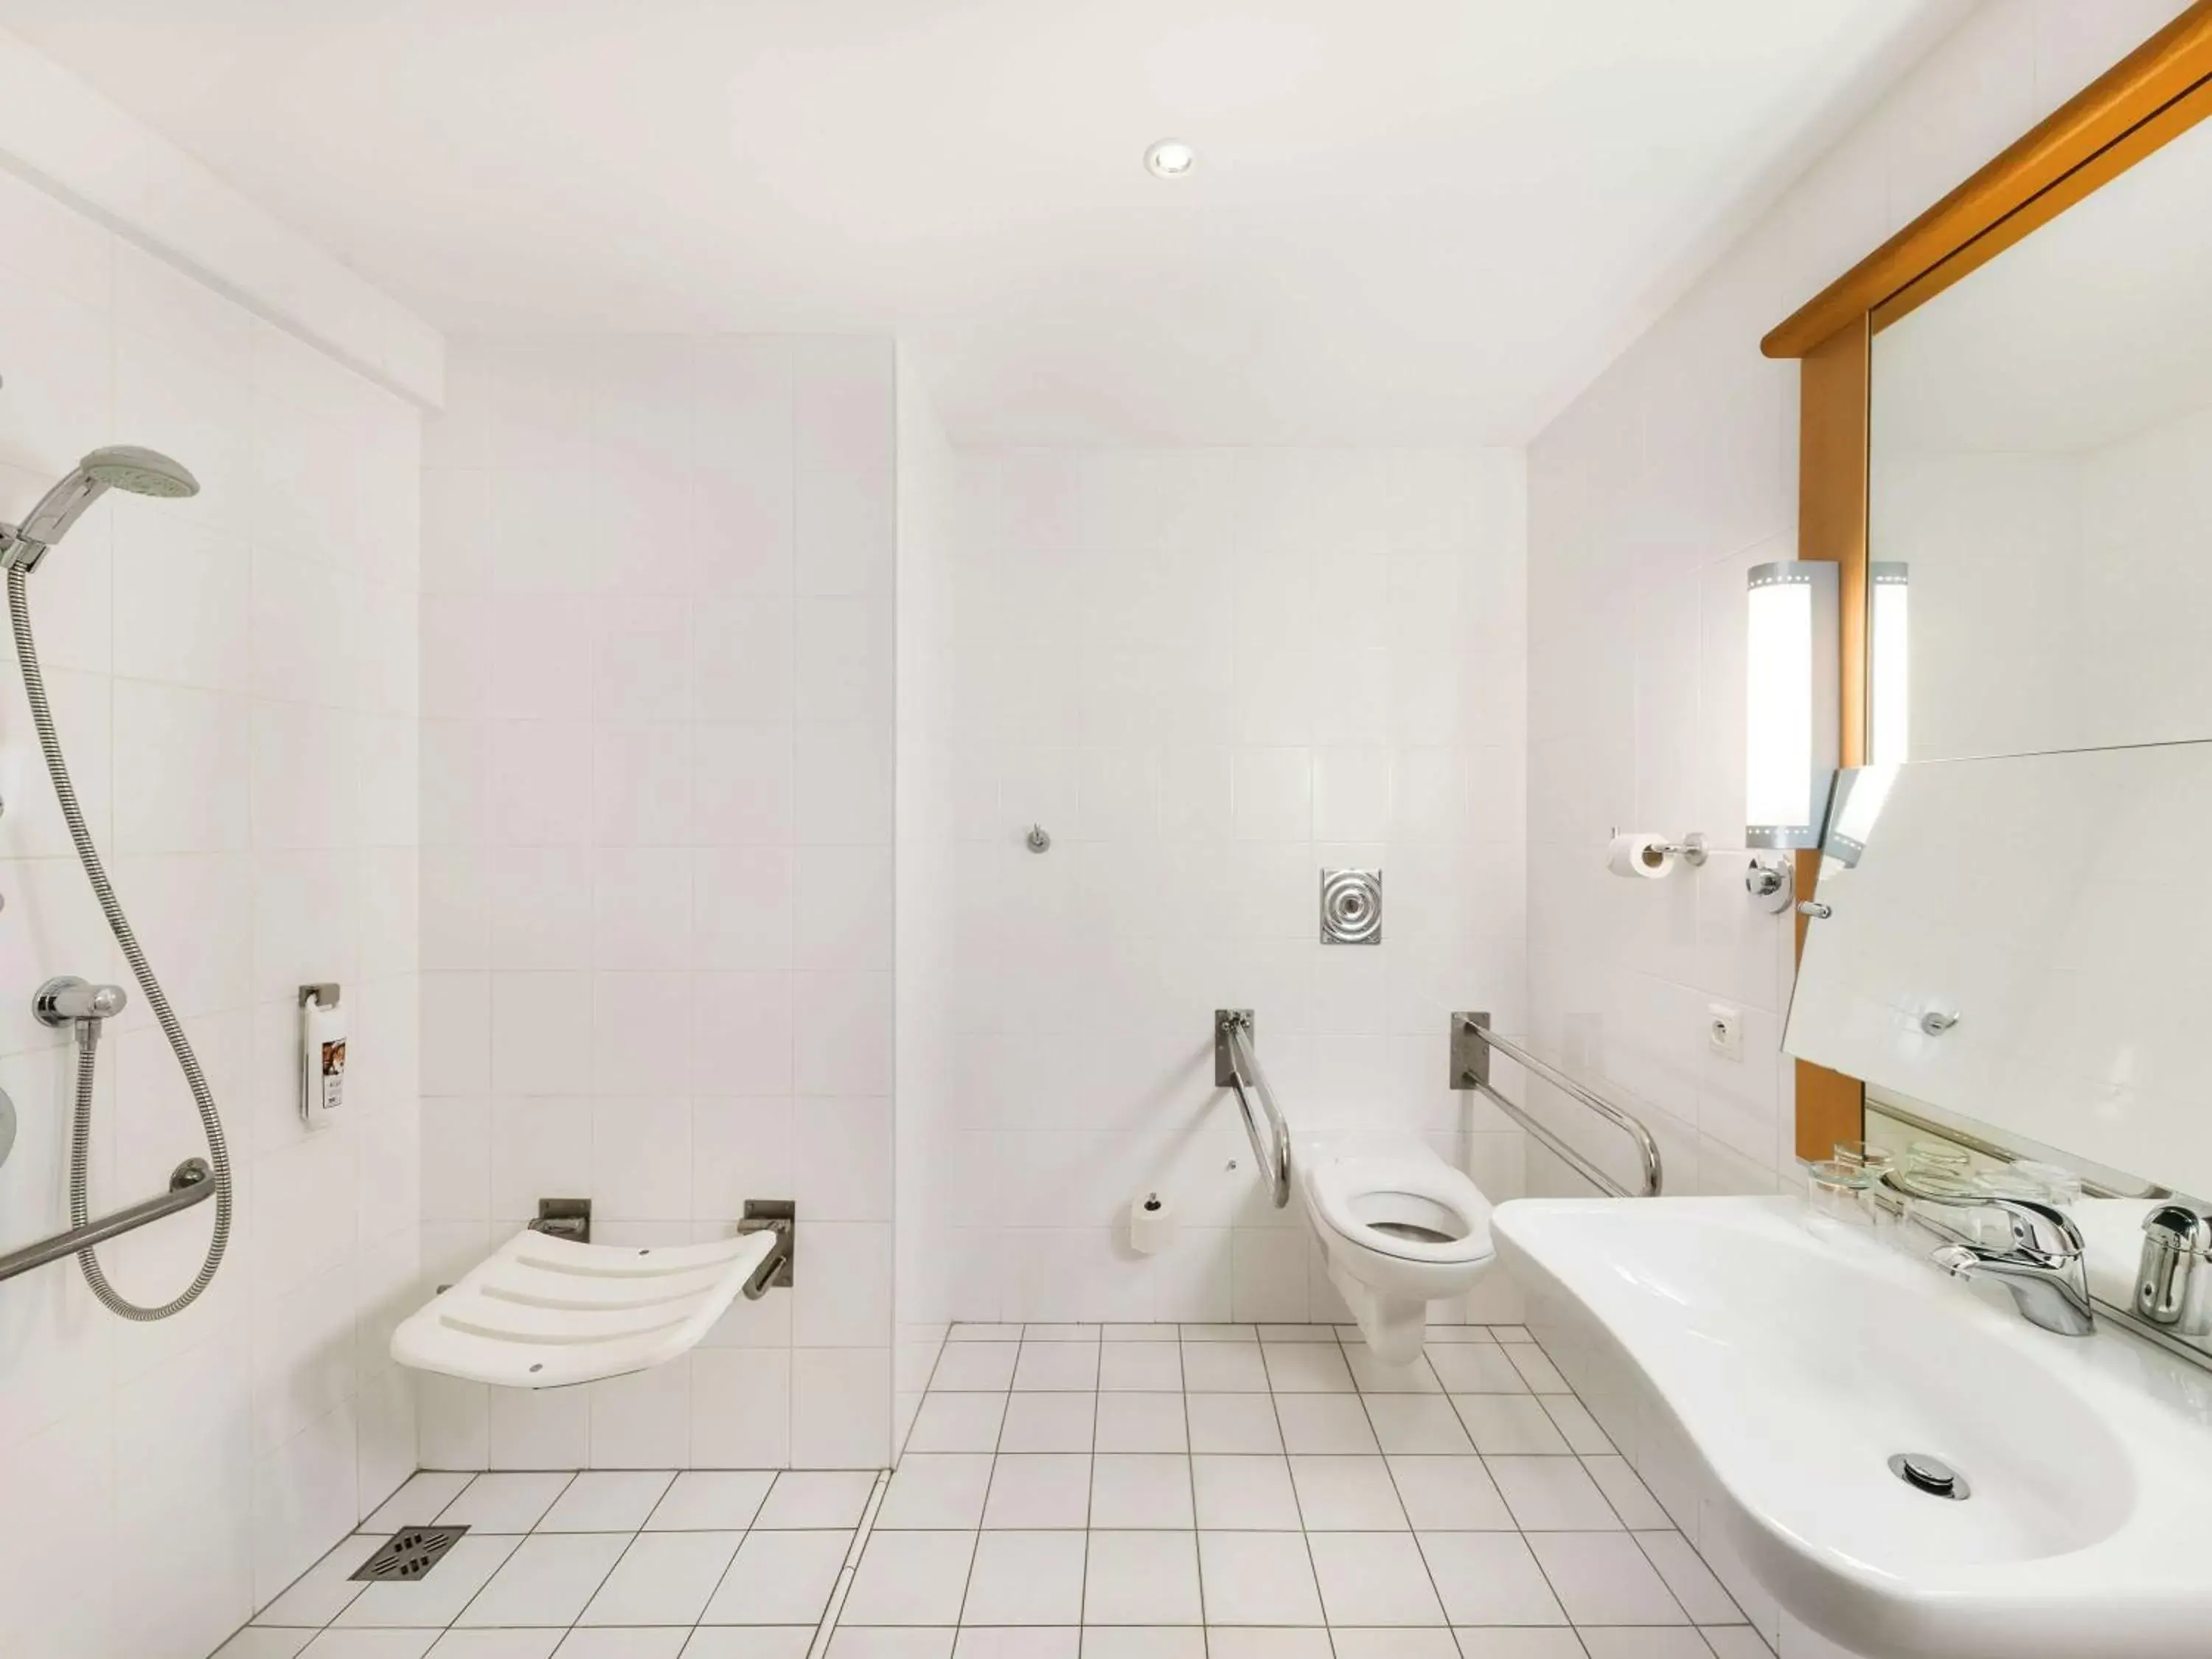 Photo of the whole room, Bathroom in Ibis Hotel Plzeň